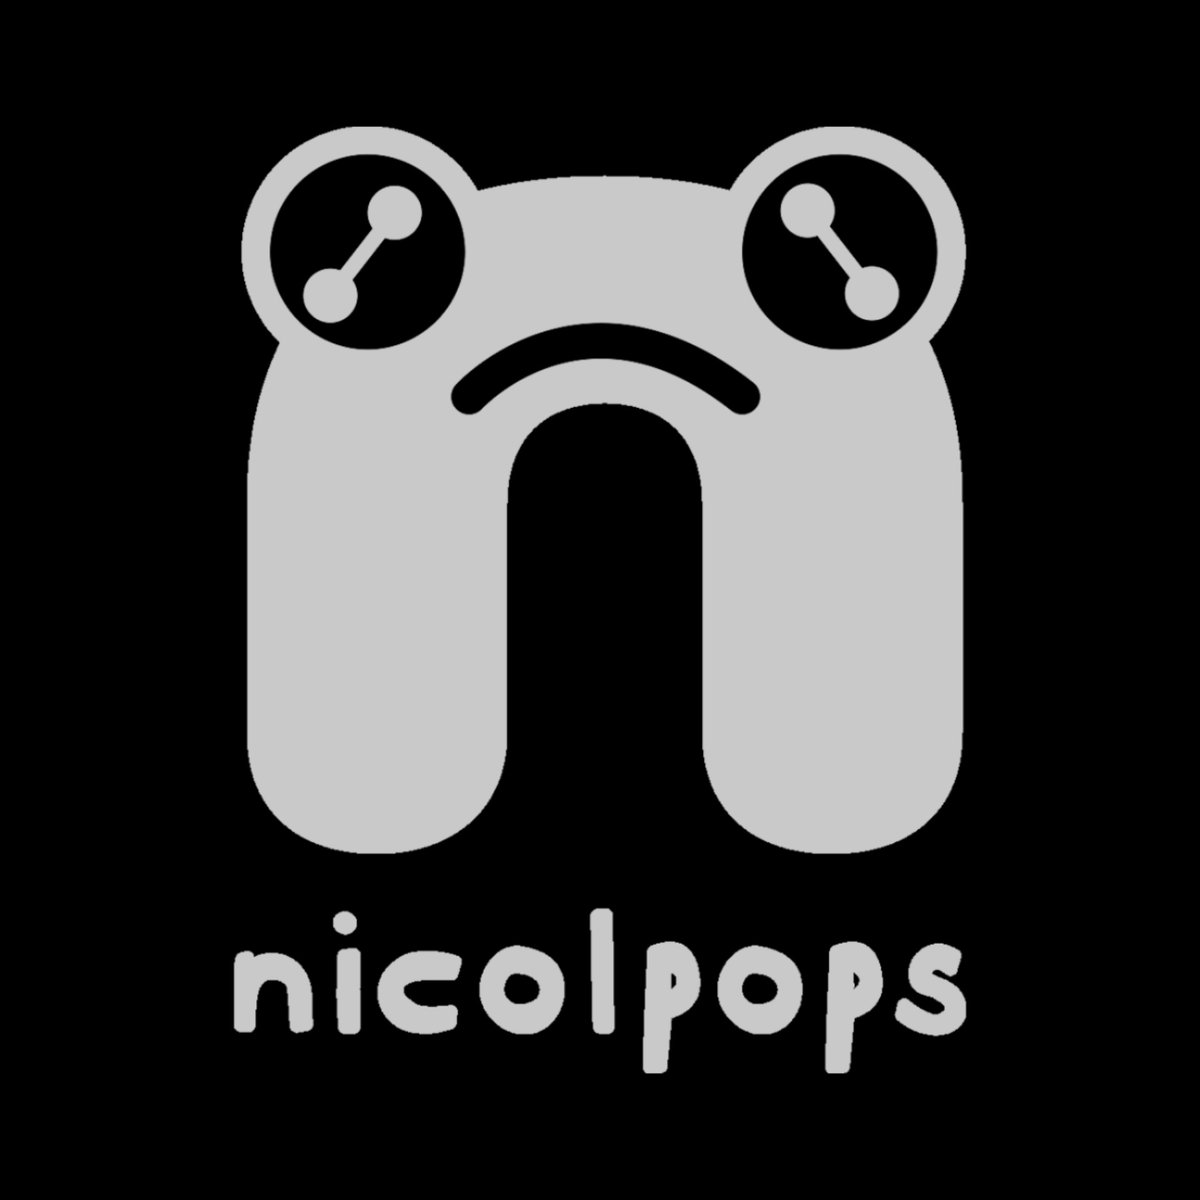 Nicolpops